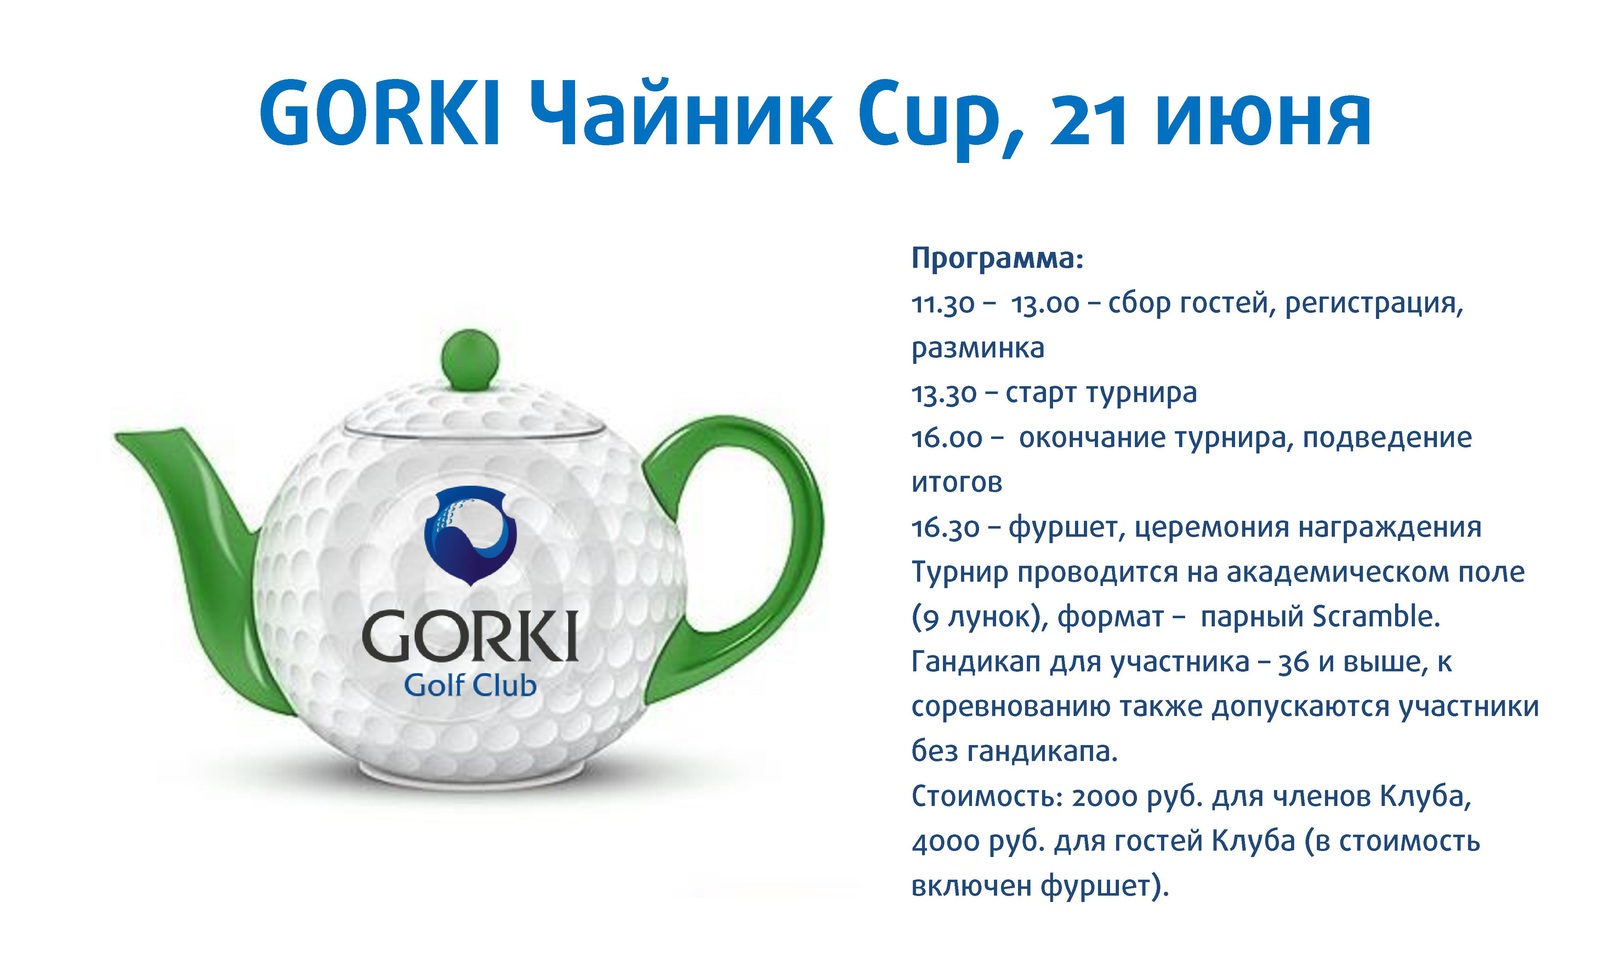 GORKI Чайник Cup.jpg